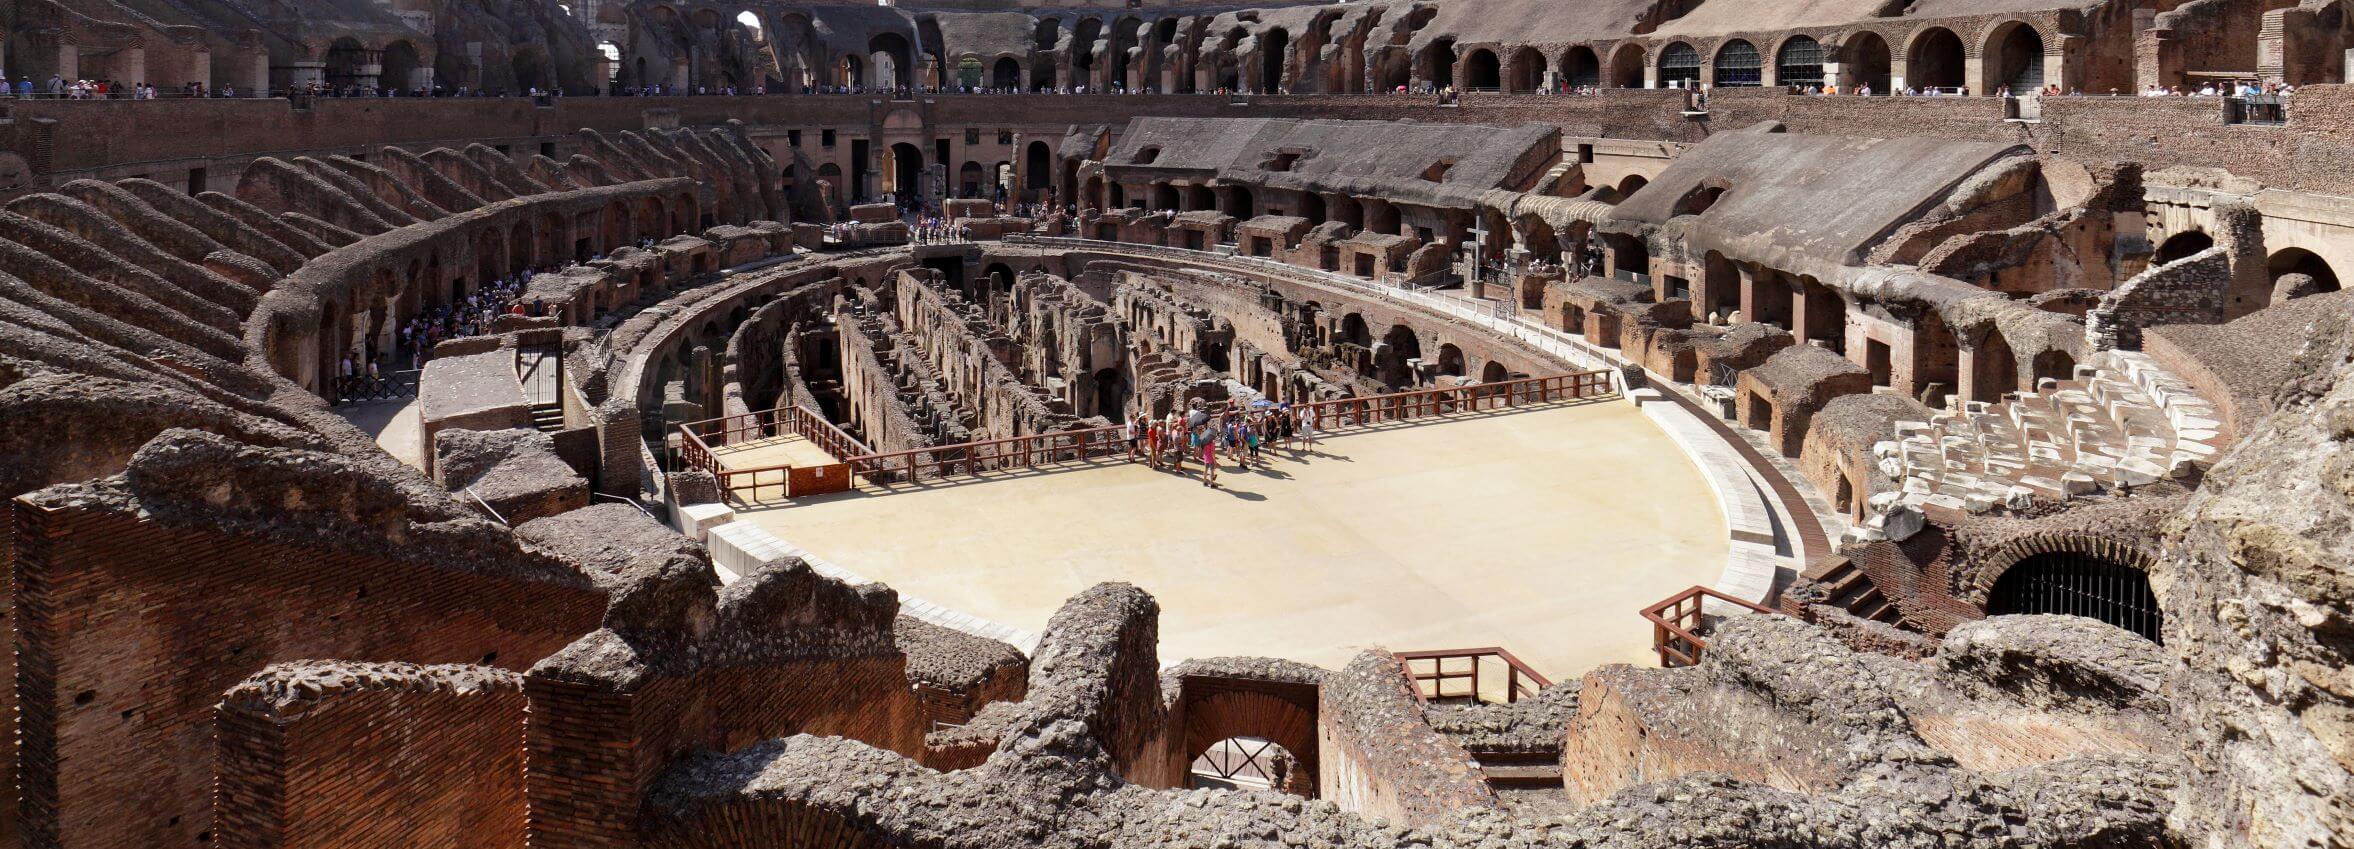 Skip the Line Colosseum Arena Floor & Ancient Rome